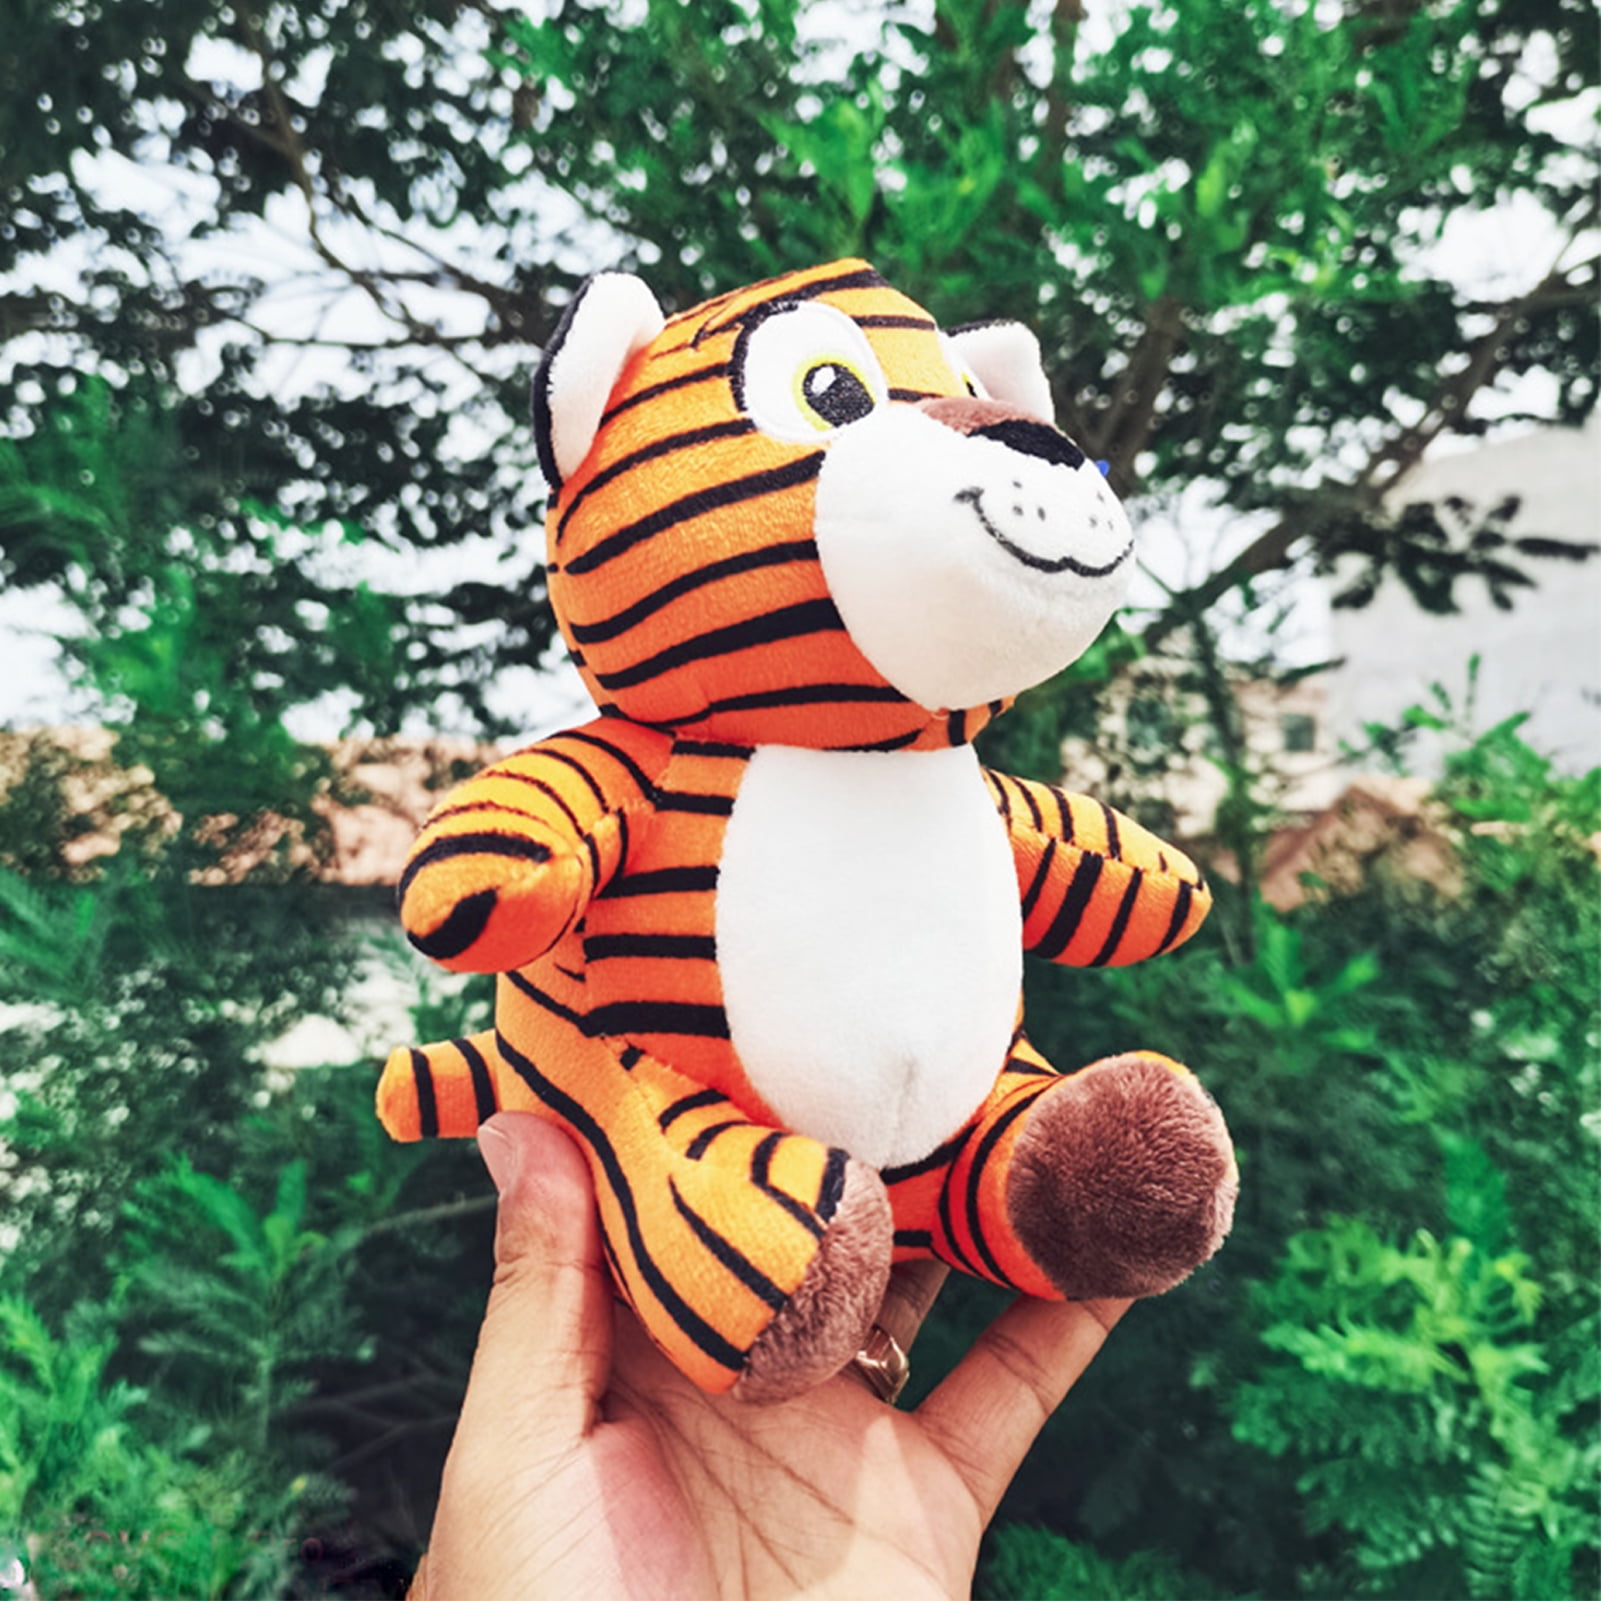 5-Inch Tall Hanging Stuffed Animal Toy Mini Regit The Tiger Plush 